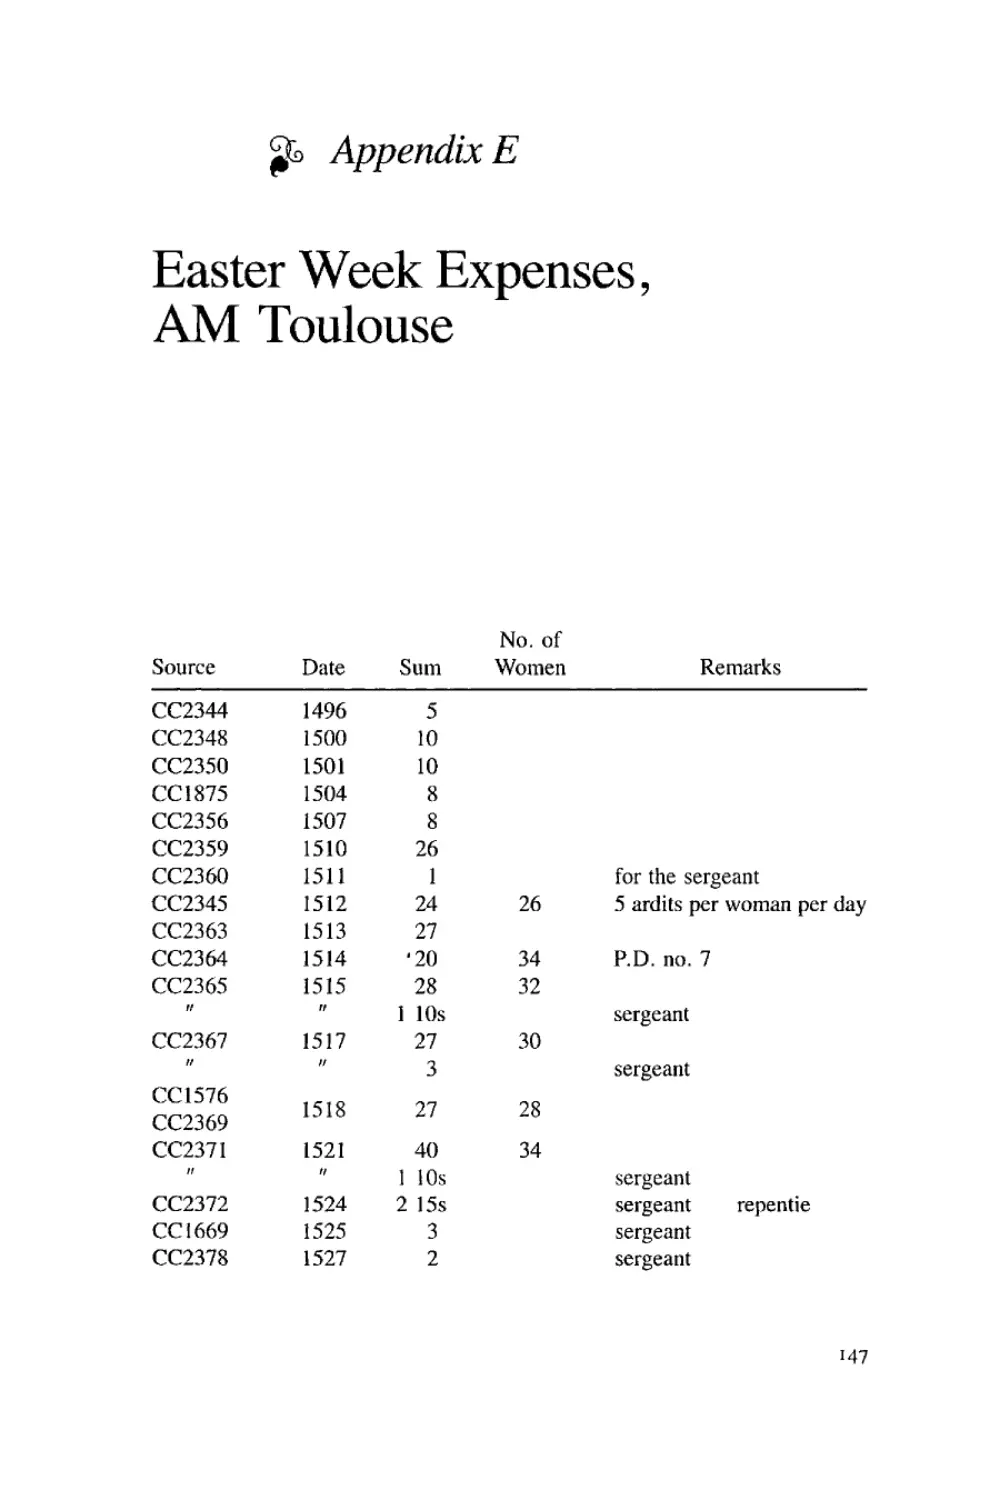 Appendix E: Easter Week Expenses, AM Toulouse